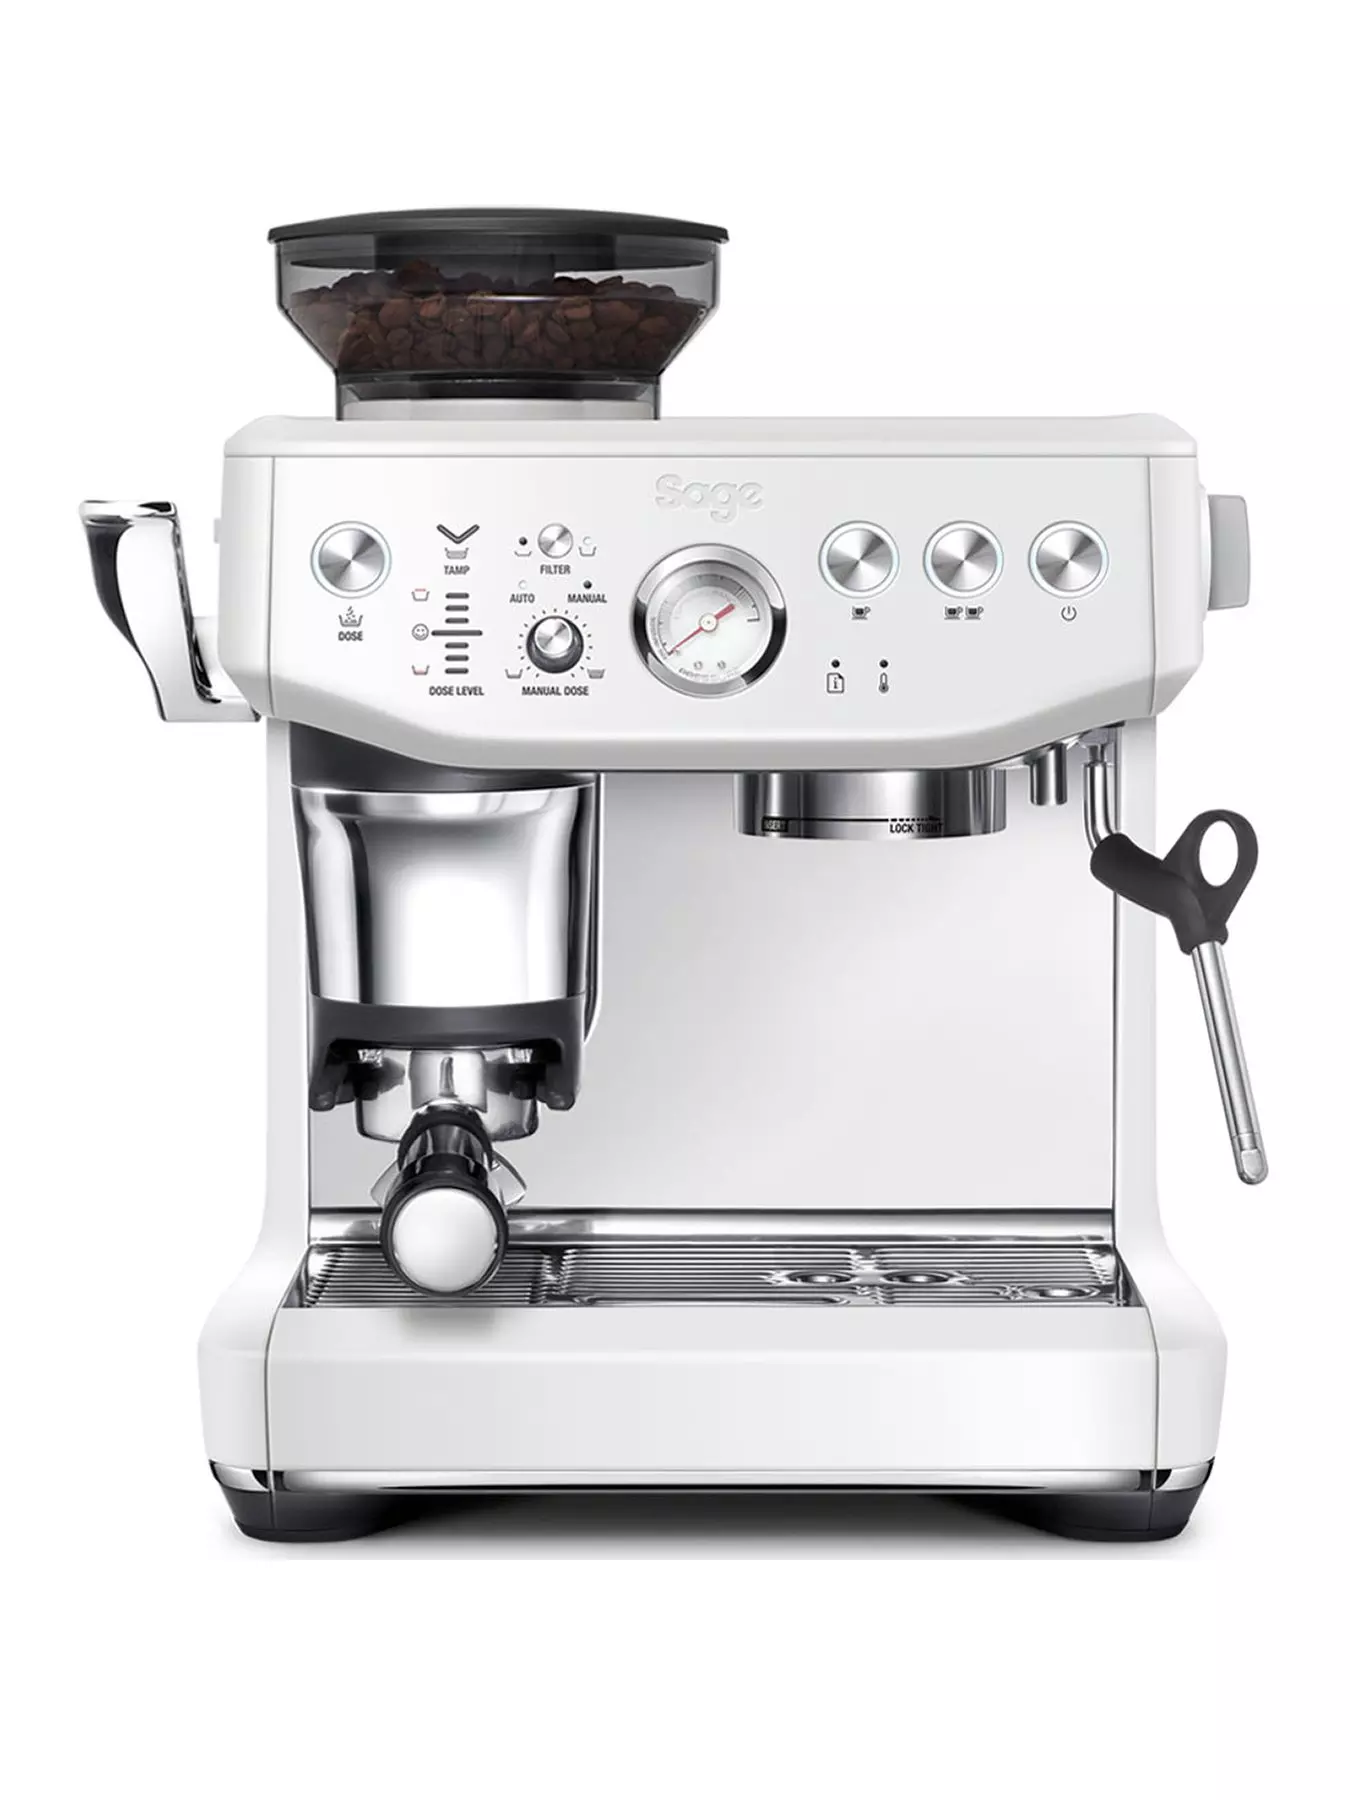 Spinn centrifugal grind-brew coffee machine delayed until early 2018